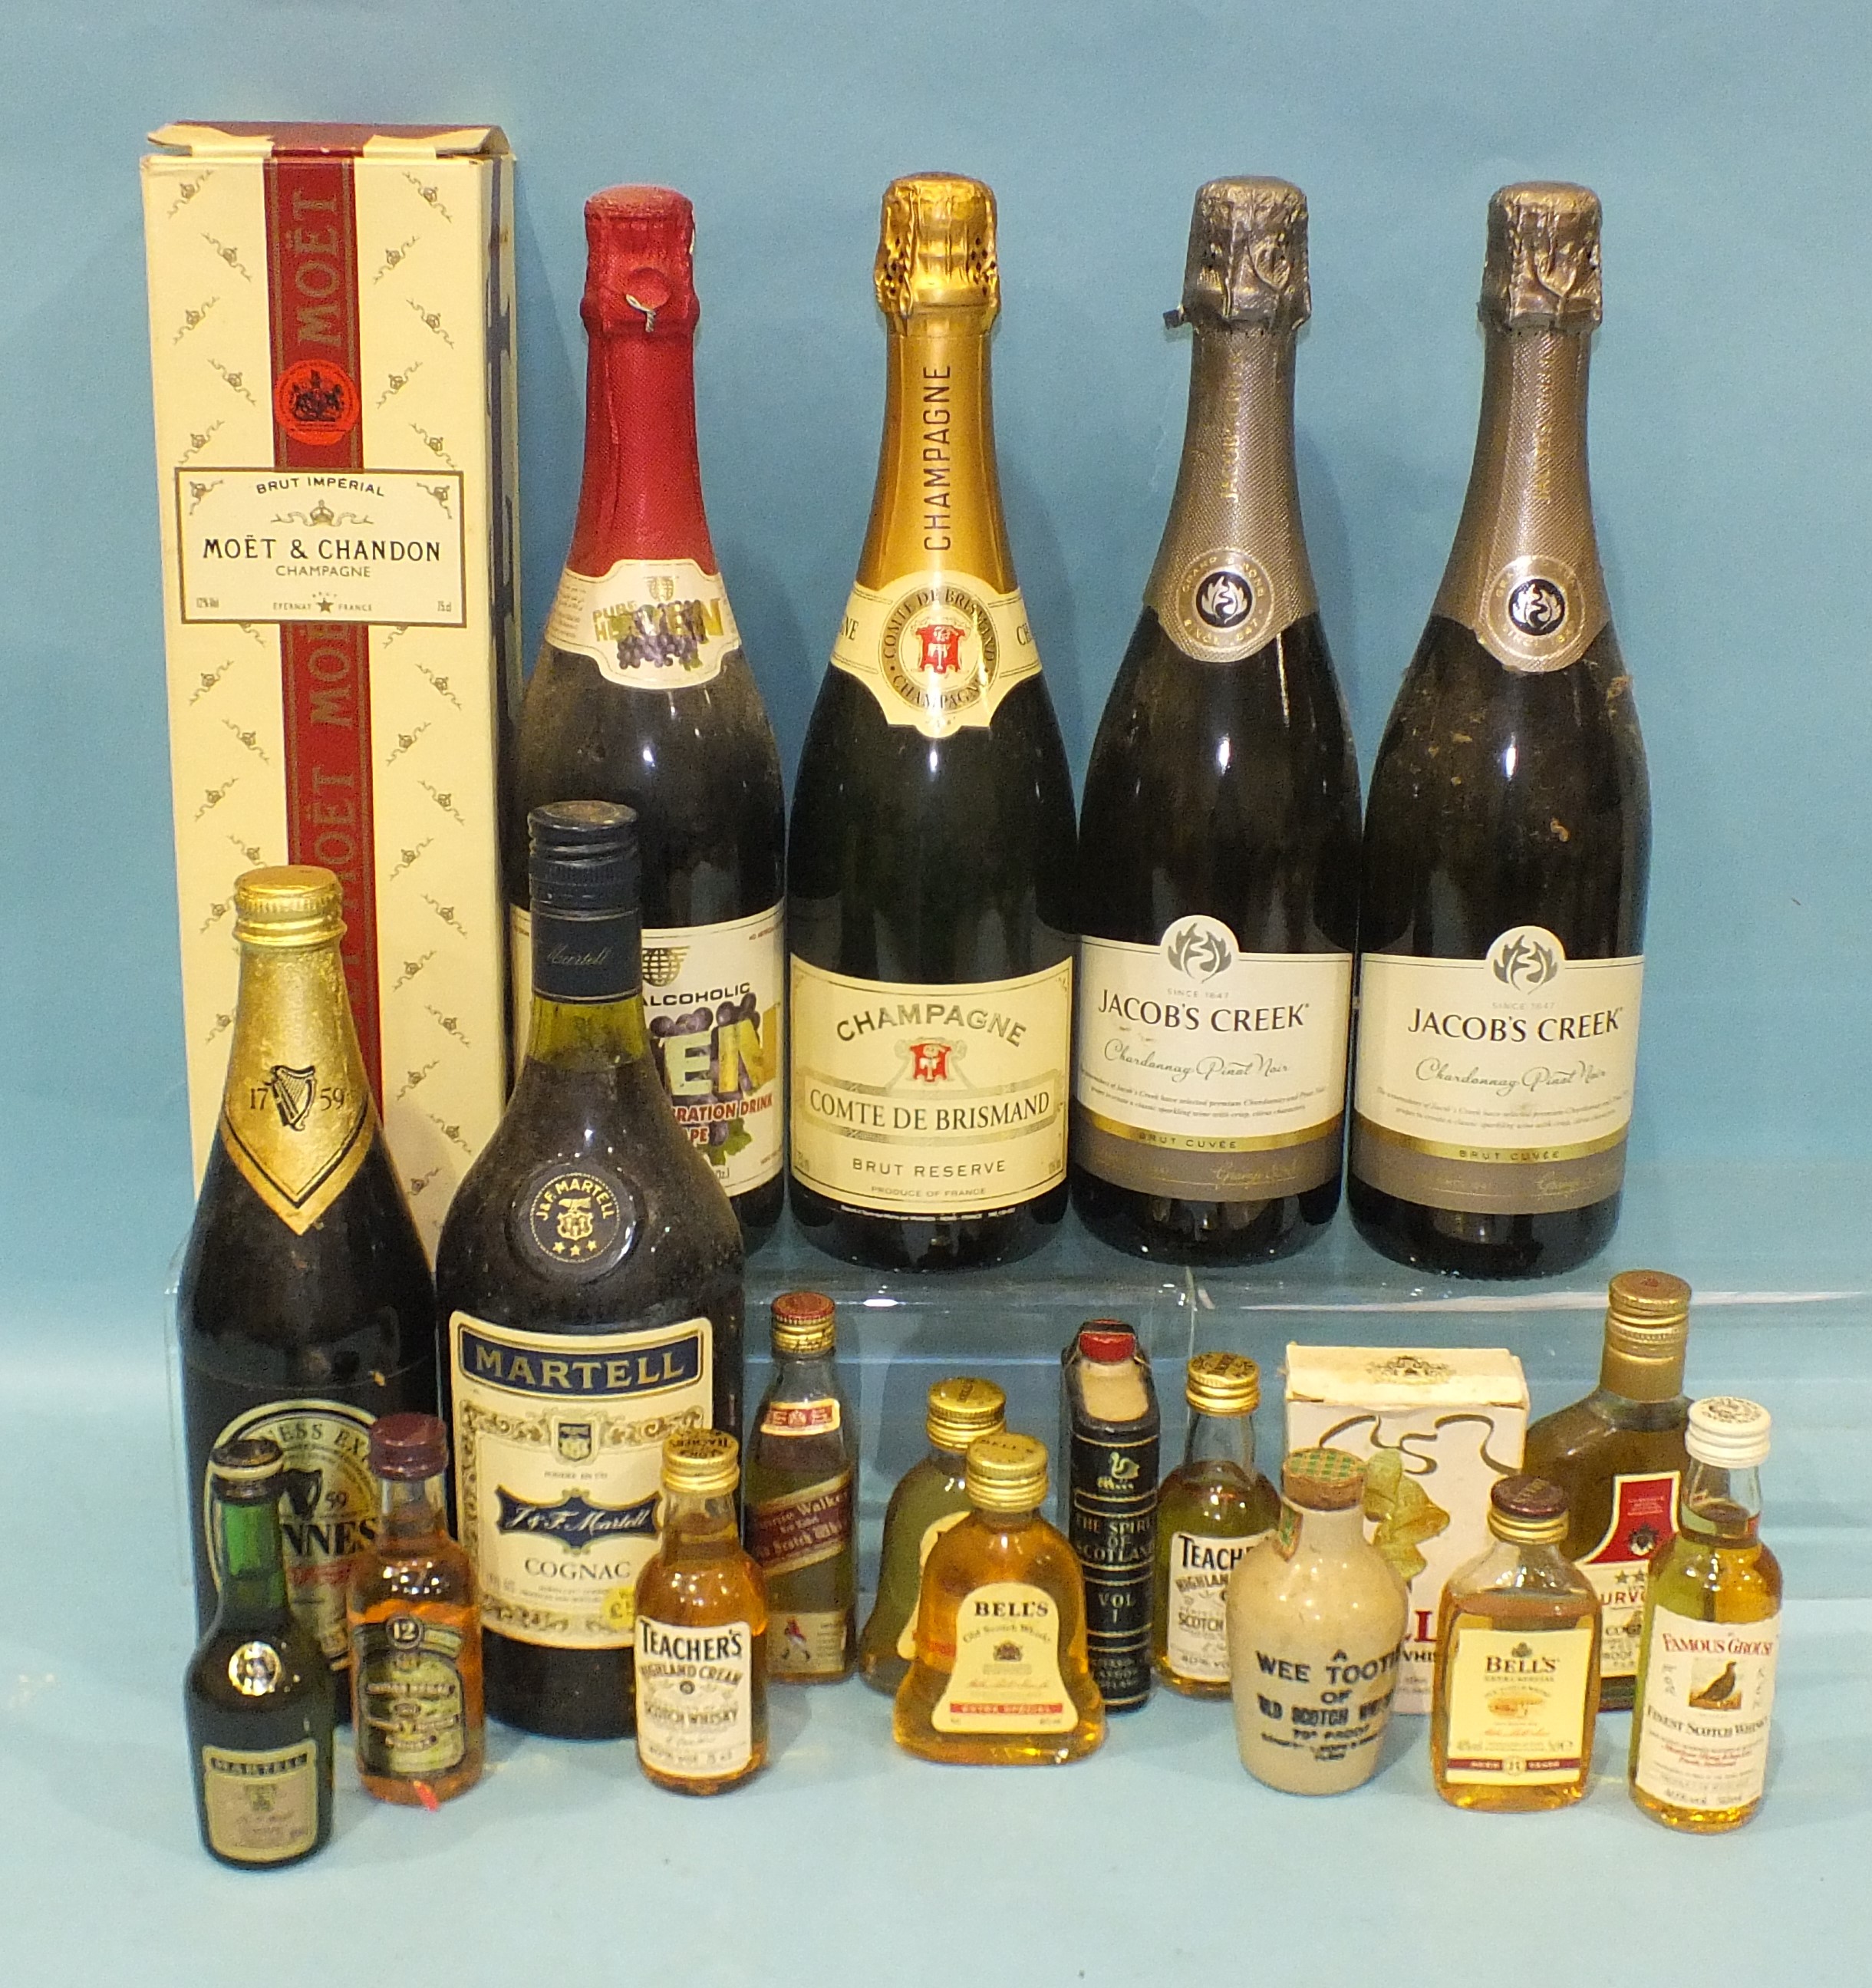 Moët & Chandon Brut Imperial Champagne, in cardboard box, one bottle, (75cl), Martell Cognac (24fl.